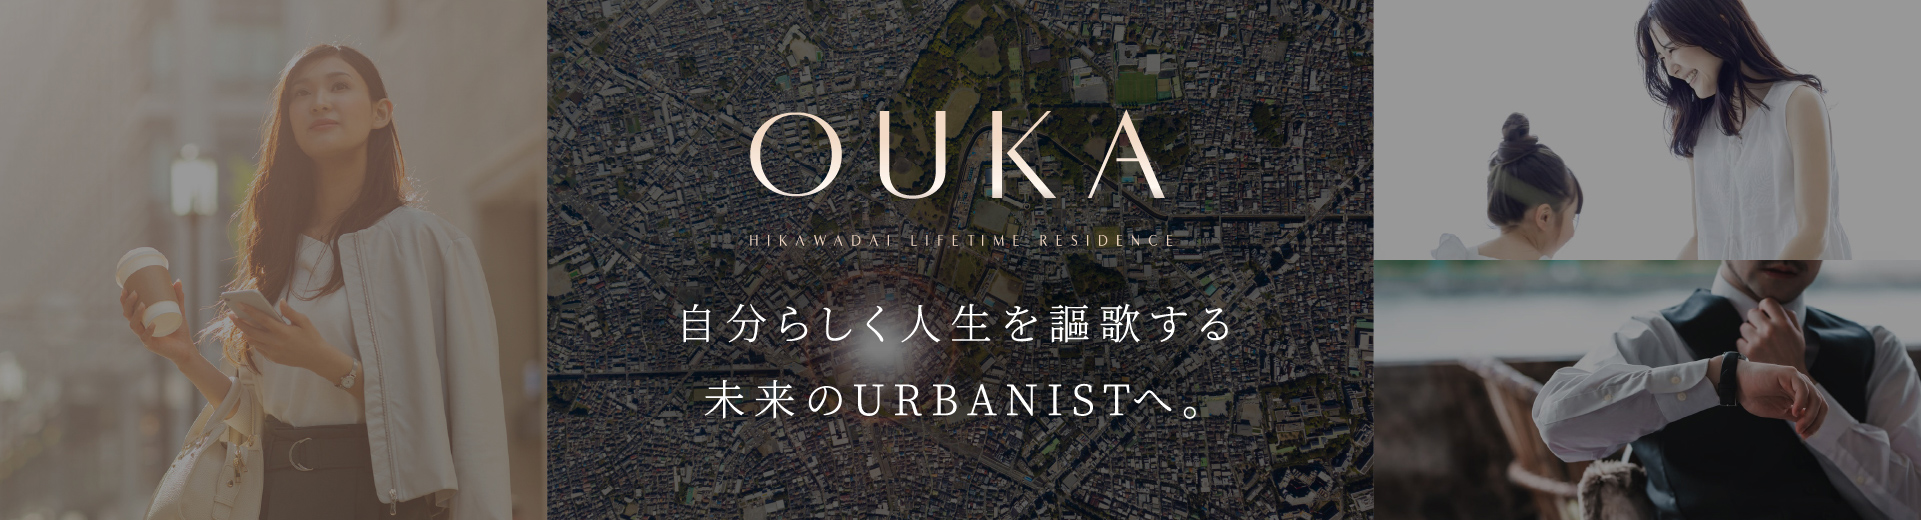 OUKA 自分らしく人生を謳歌する未来のURBANISTへ。